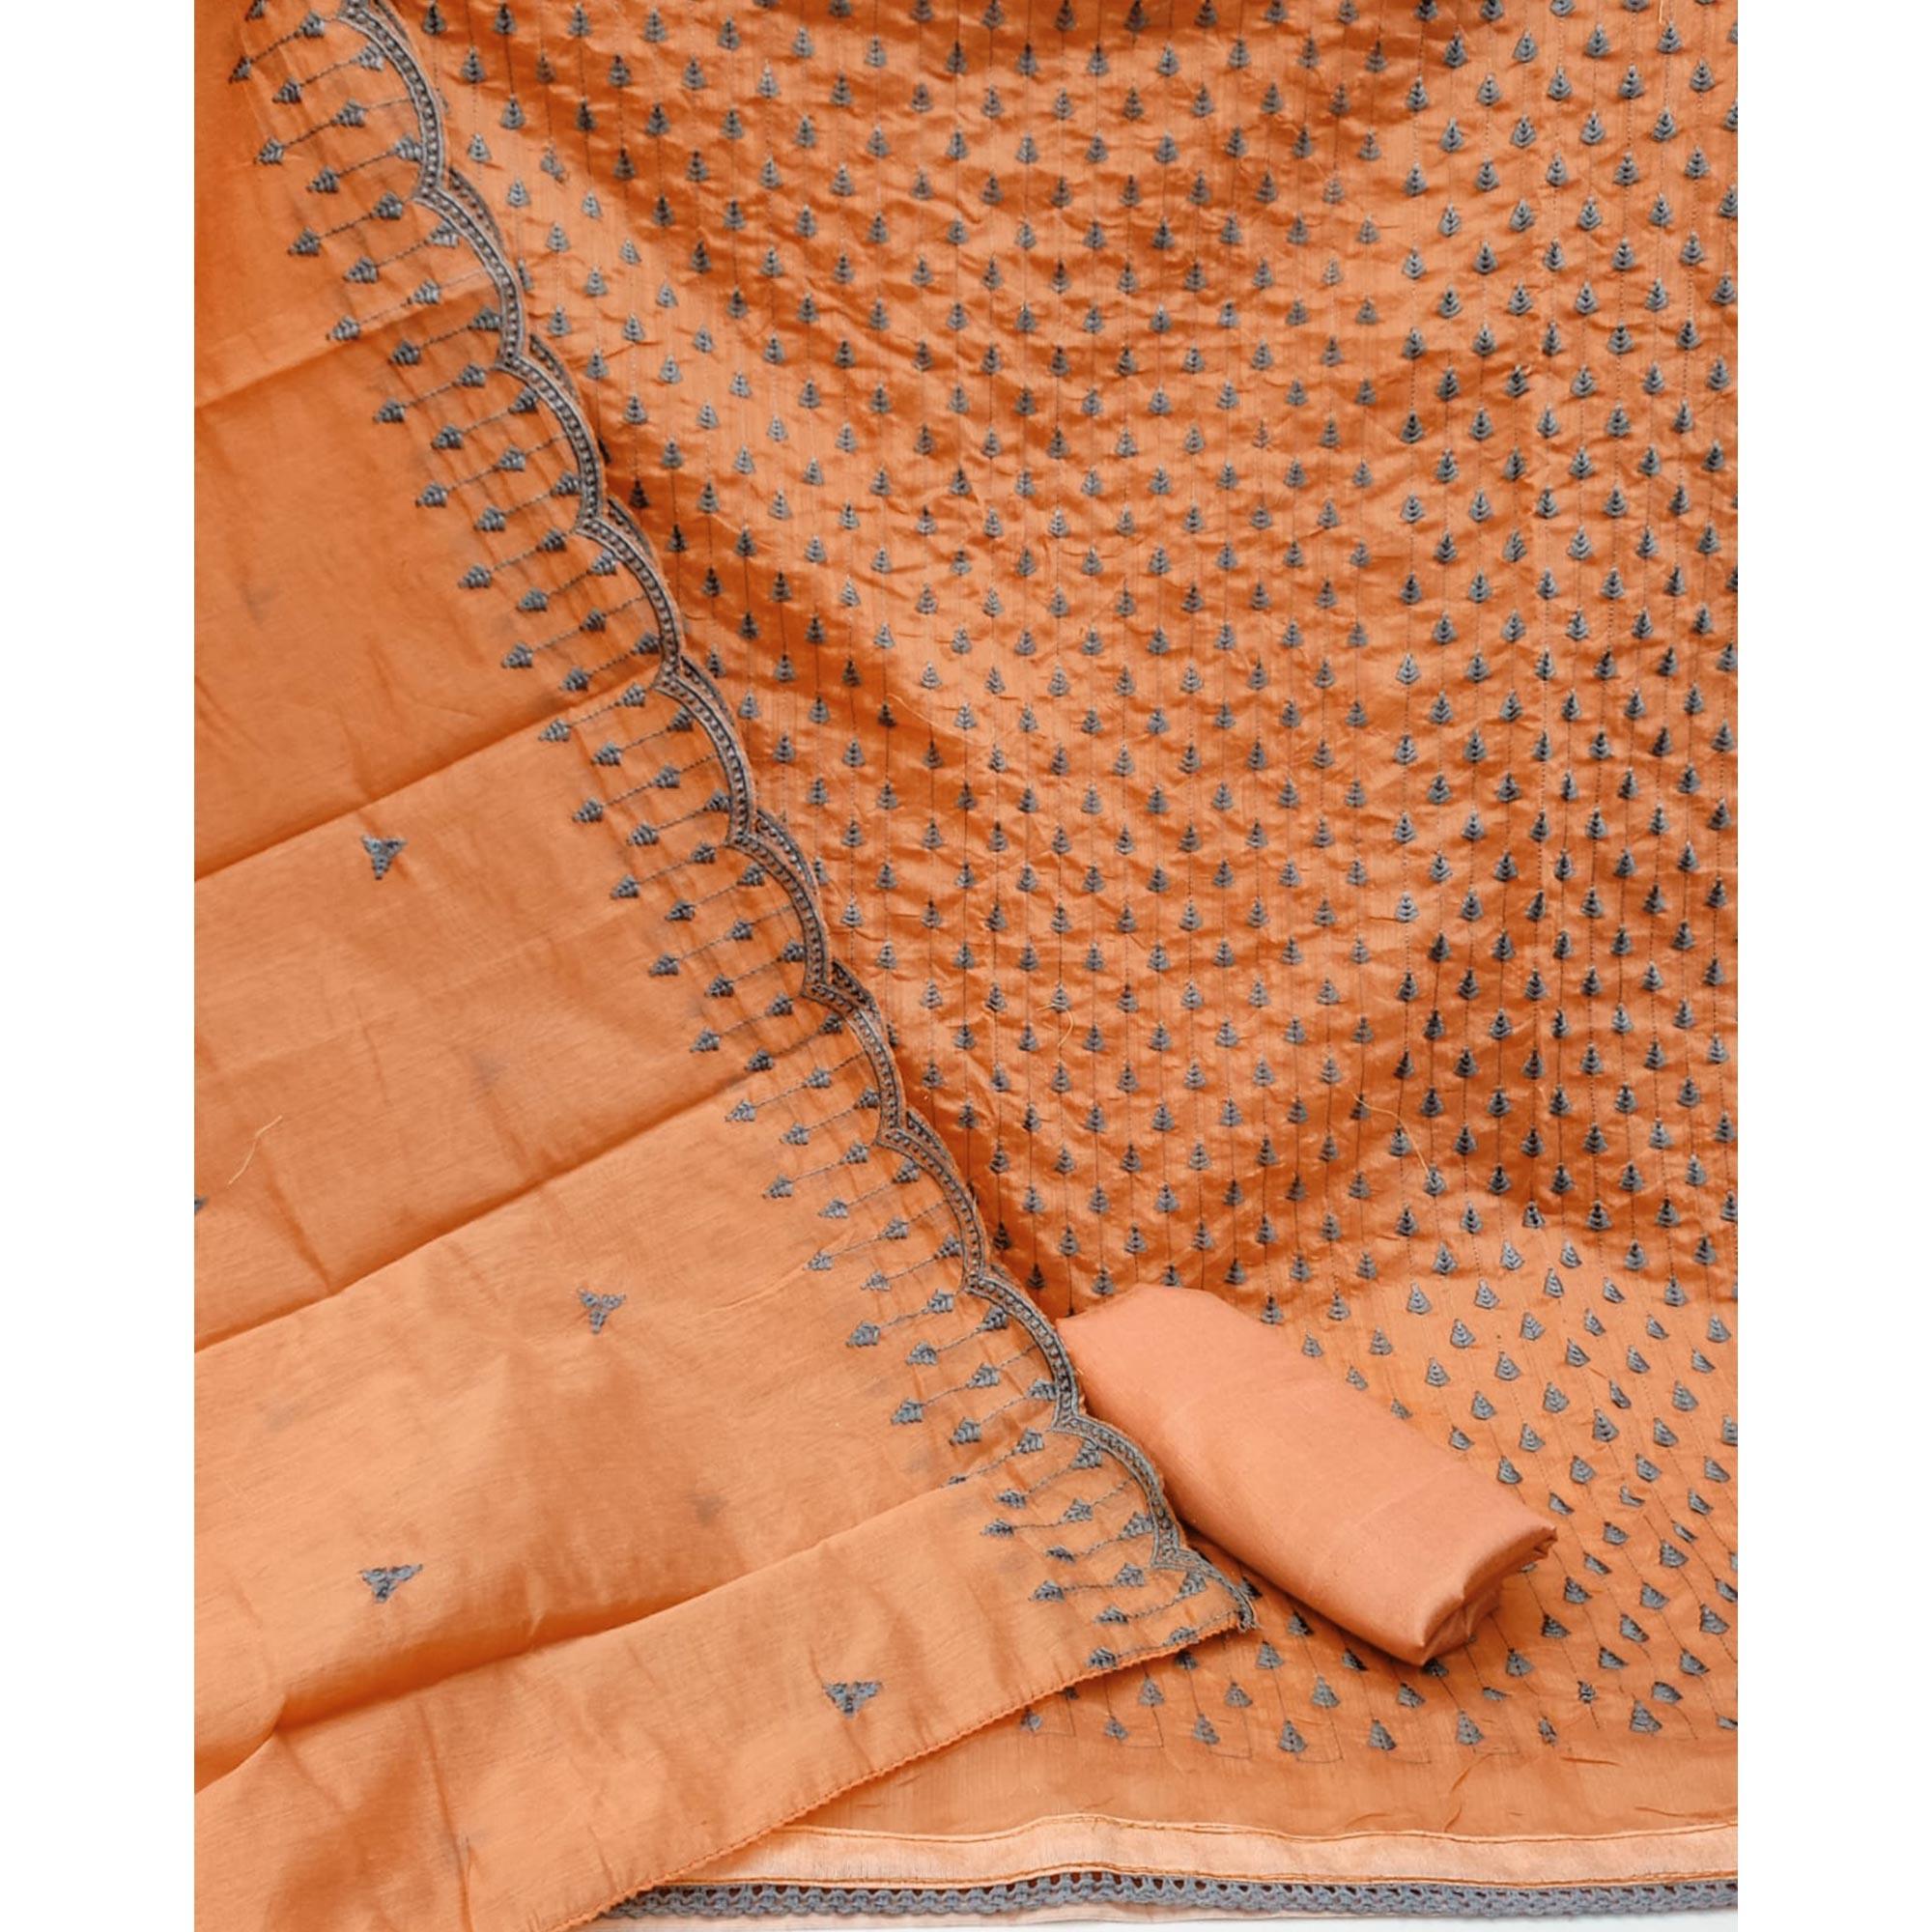 Orange Embroidered Chanderi Dress Material - Peachmode